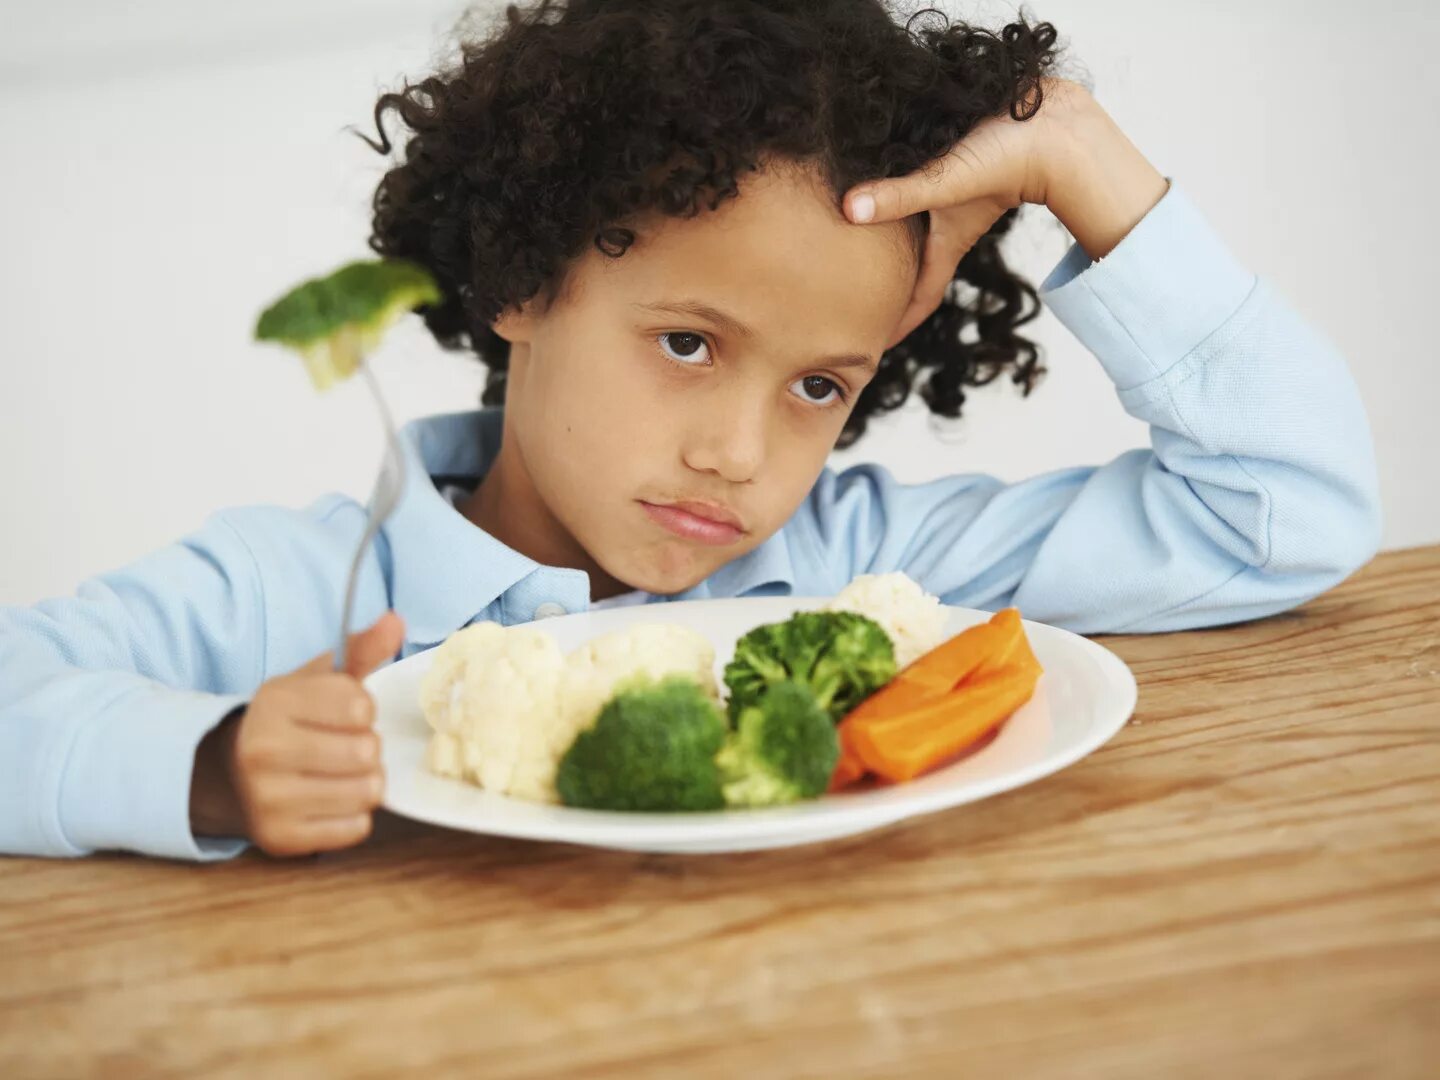 Children like to take. Еда для детей. Питание детей. Невкусная еда для детей. Вегетарианство и дети.